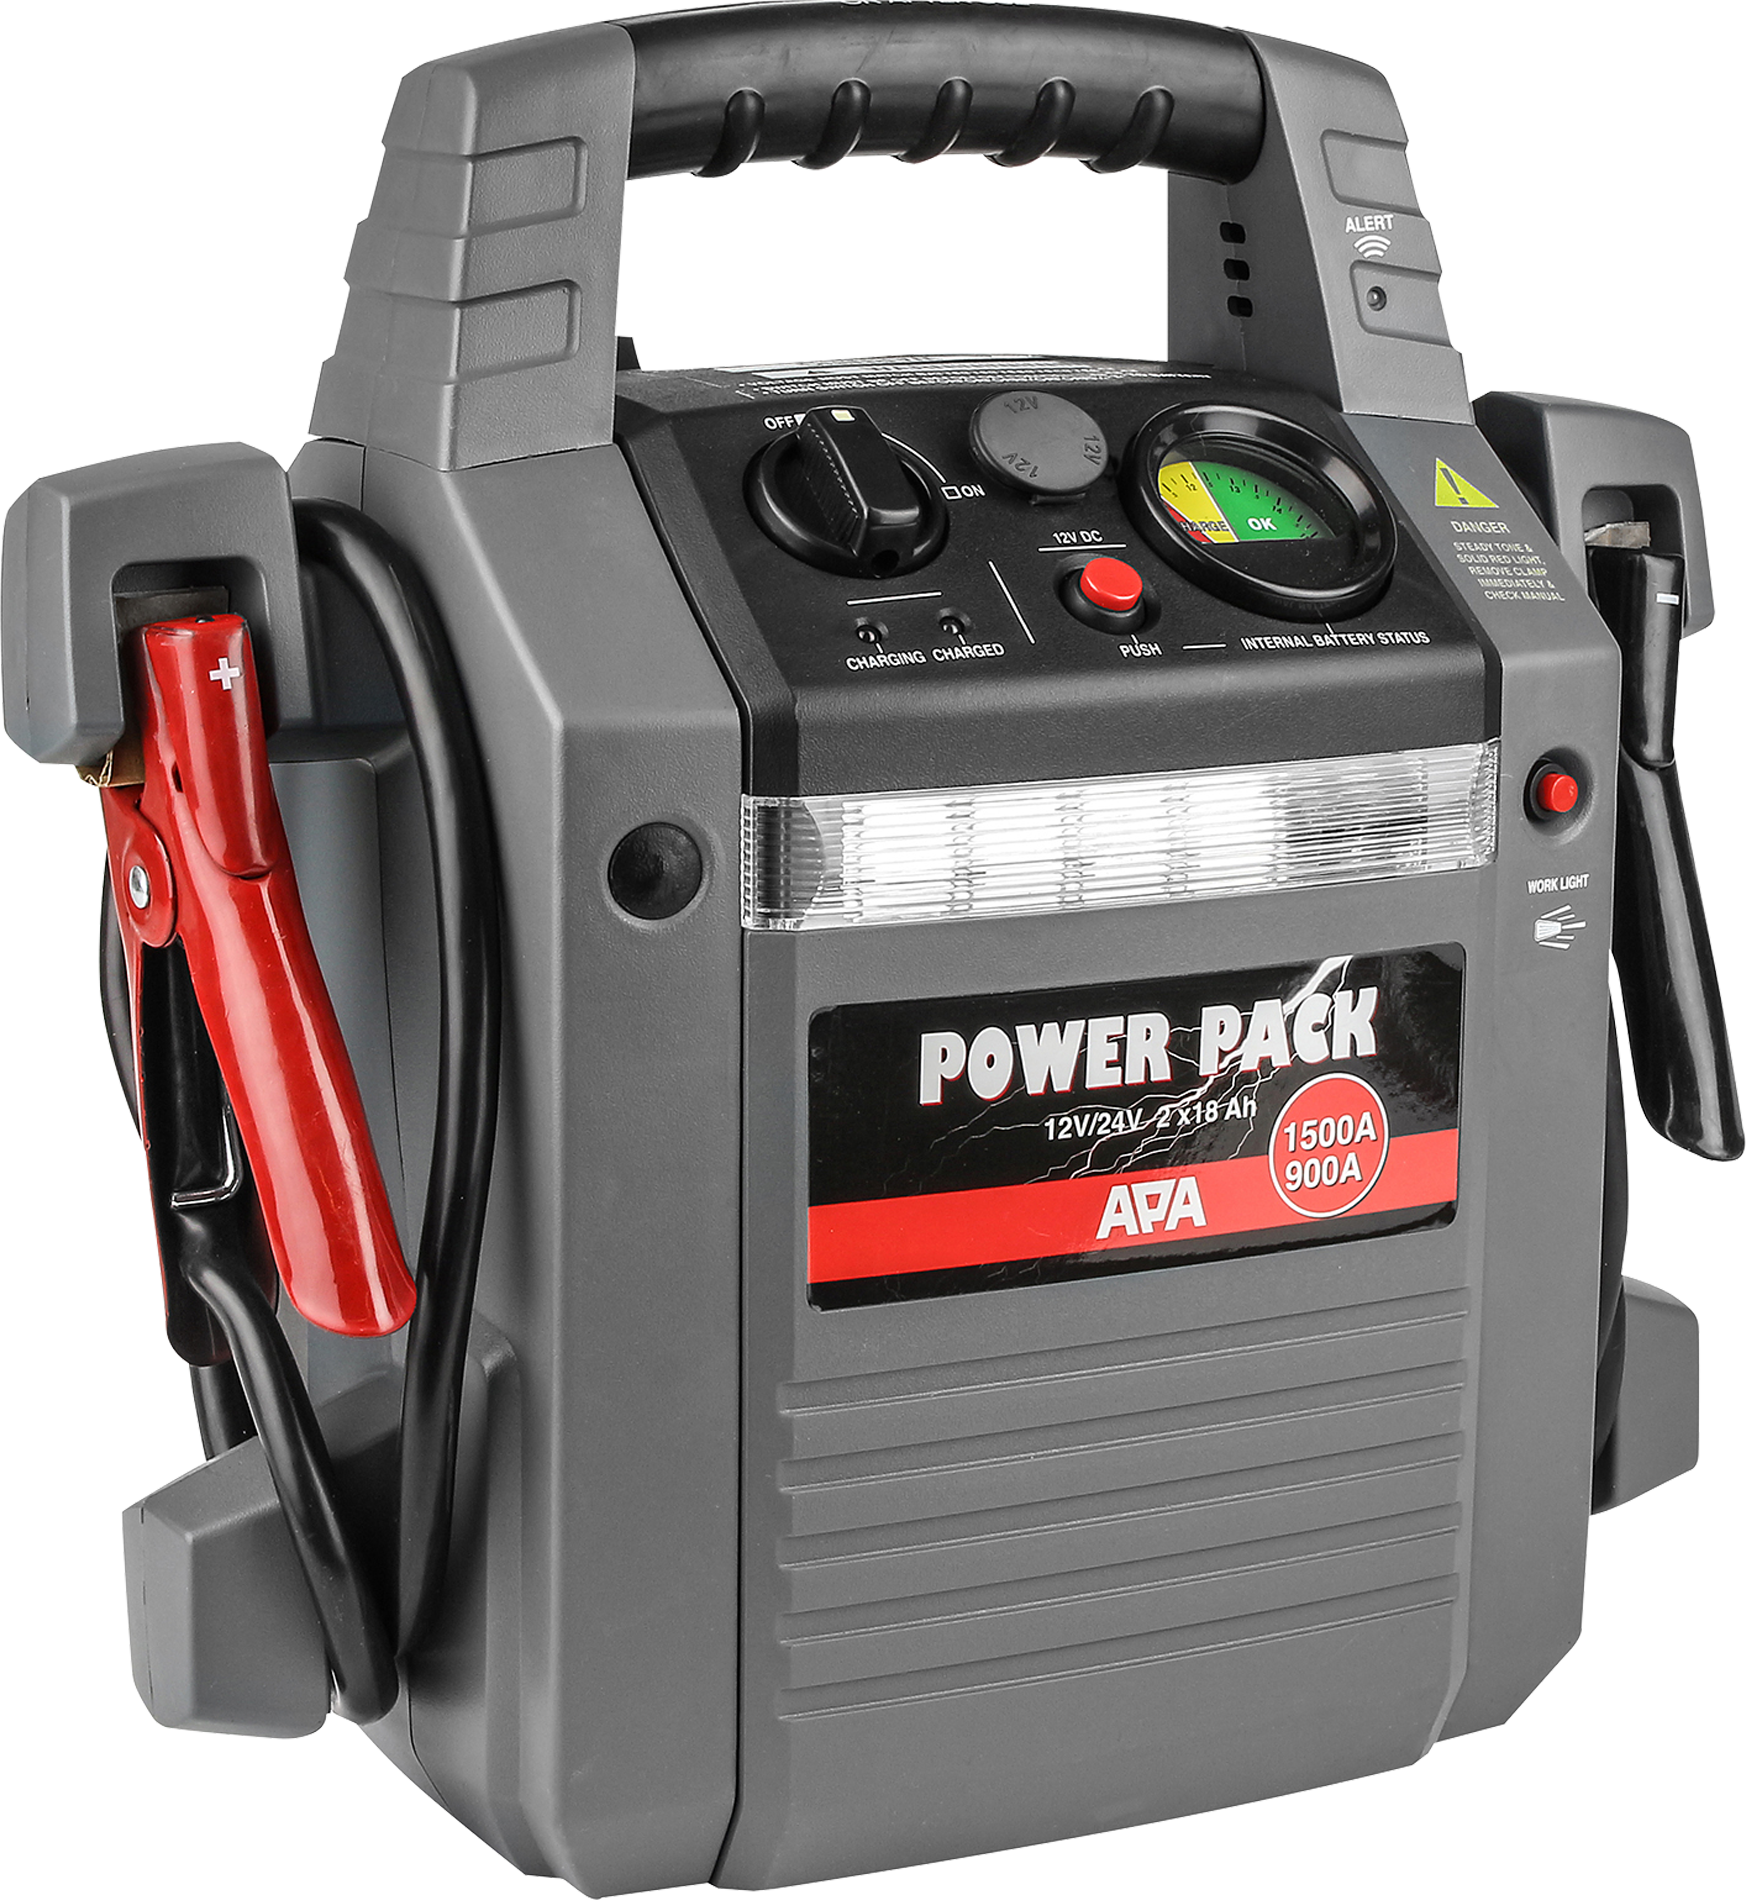 Apa Power Pack 12/24 V Starthilfe 900 A jetzt bestellen!